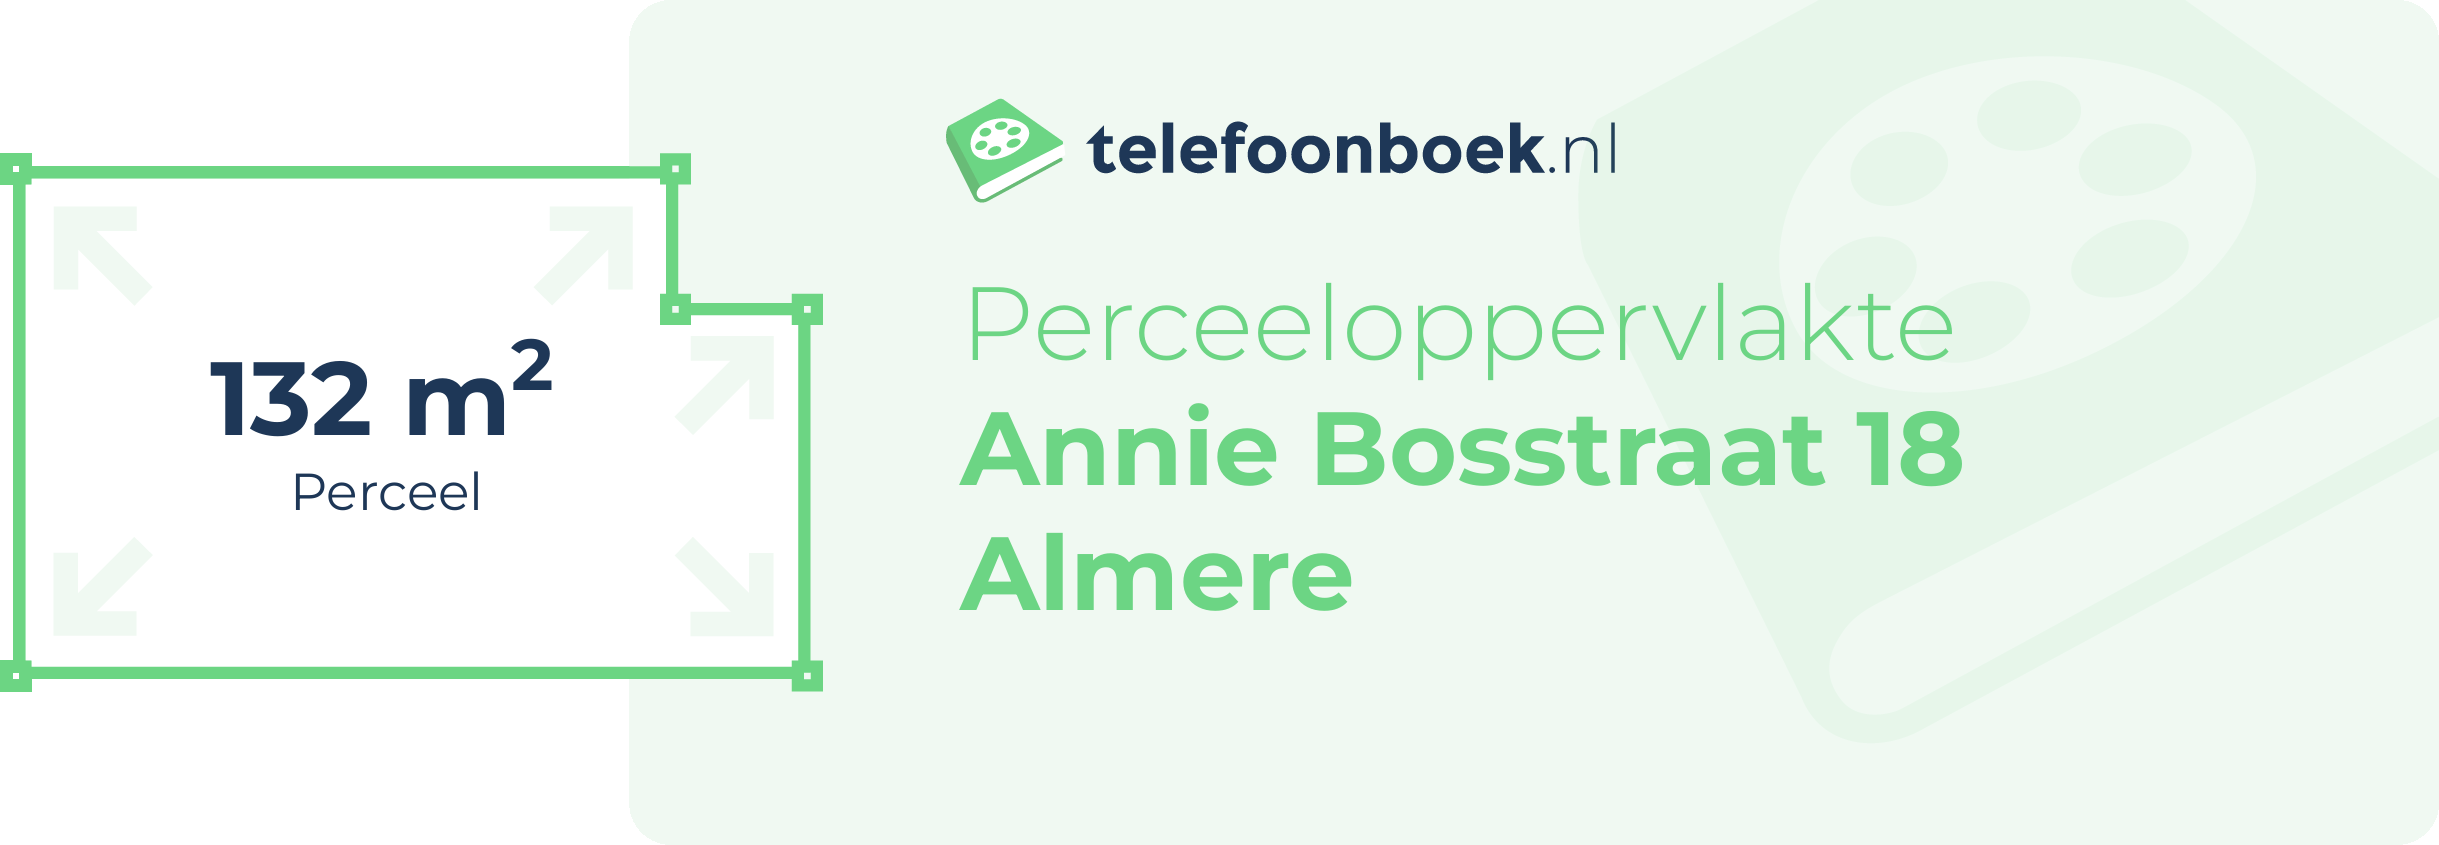 Perceeloppervlakte Annie Bosstraat 18 Almere